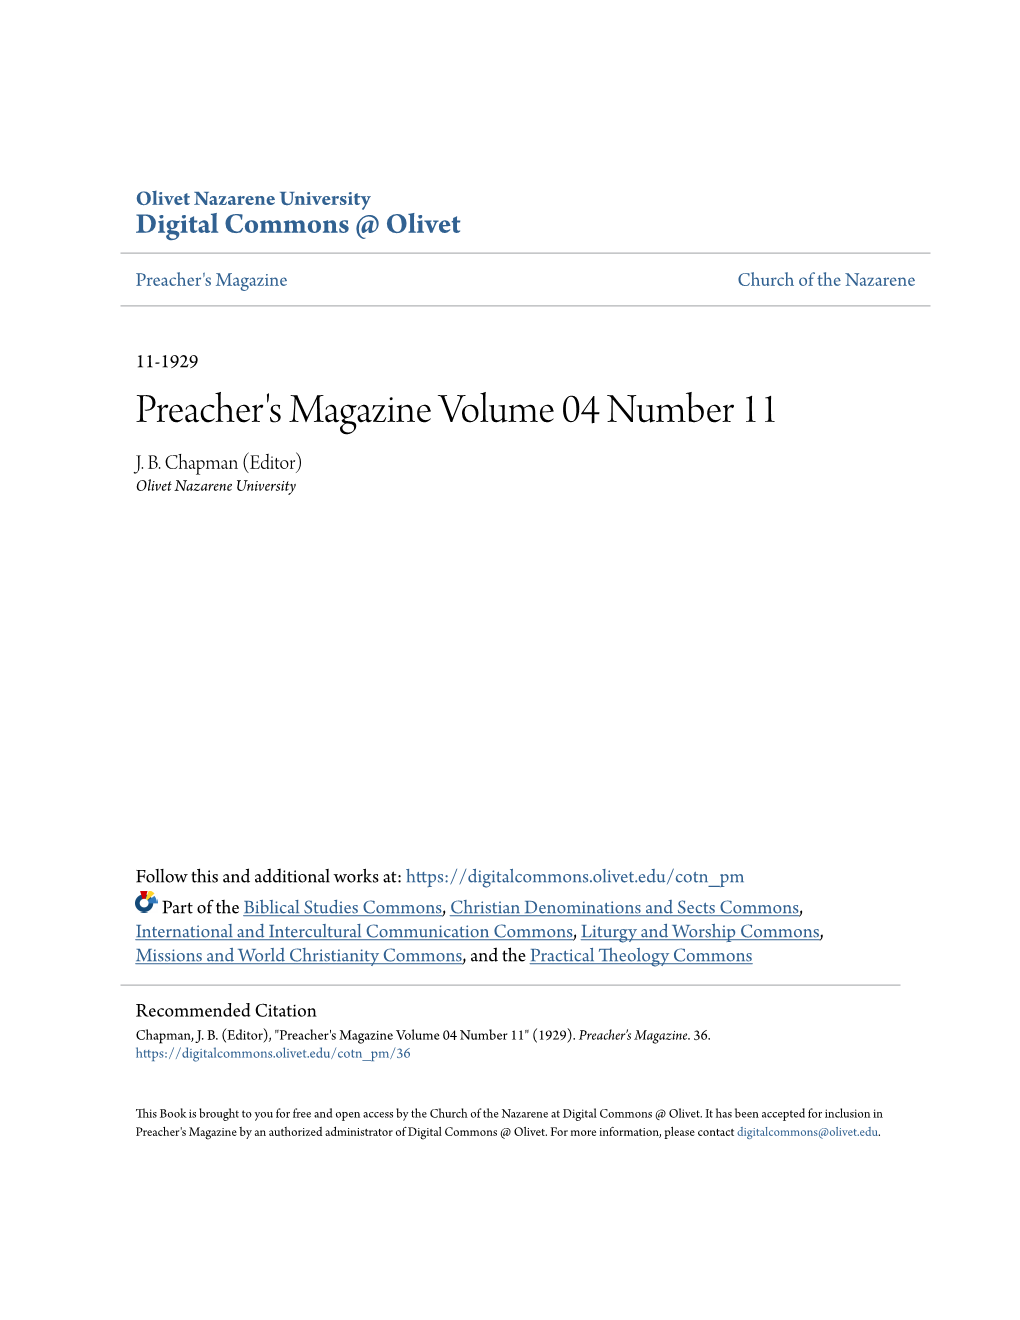 Preacher's Magazine Volume 04 Number 11 J